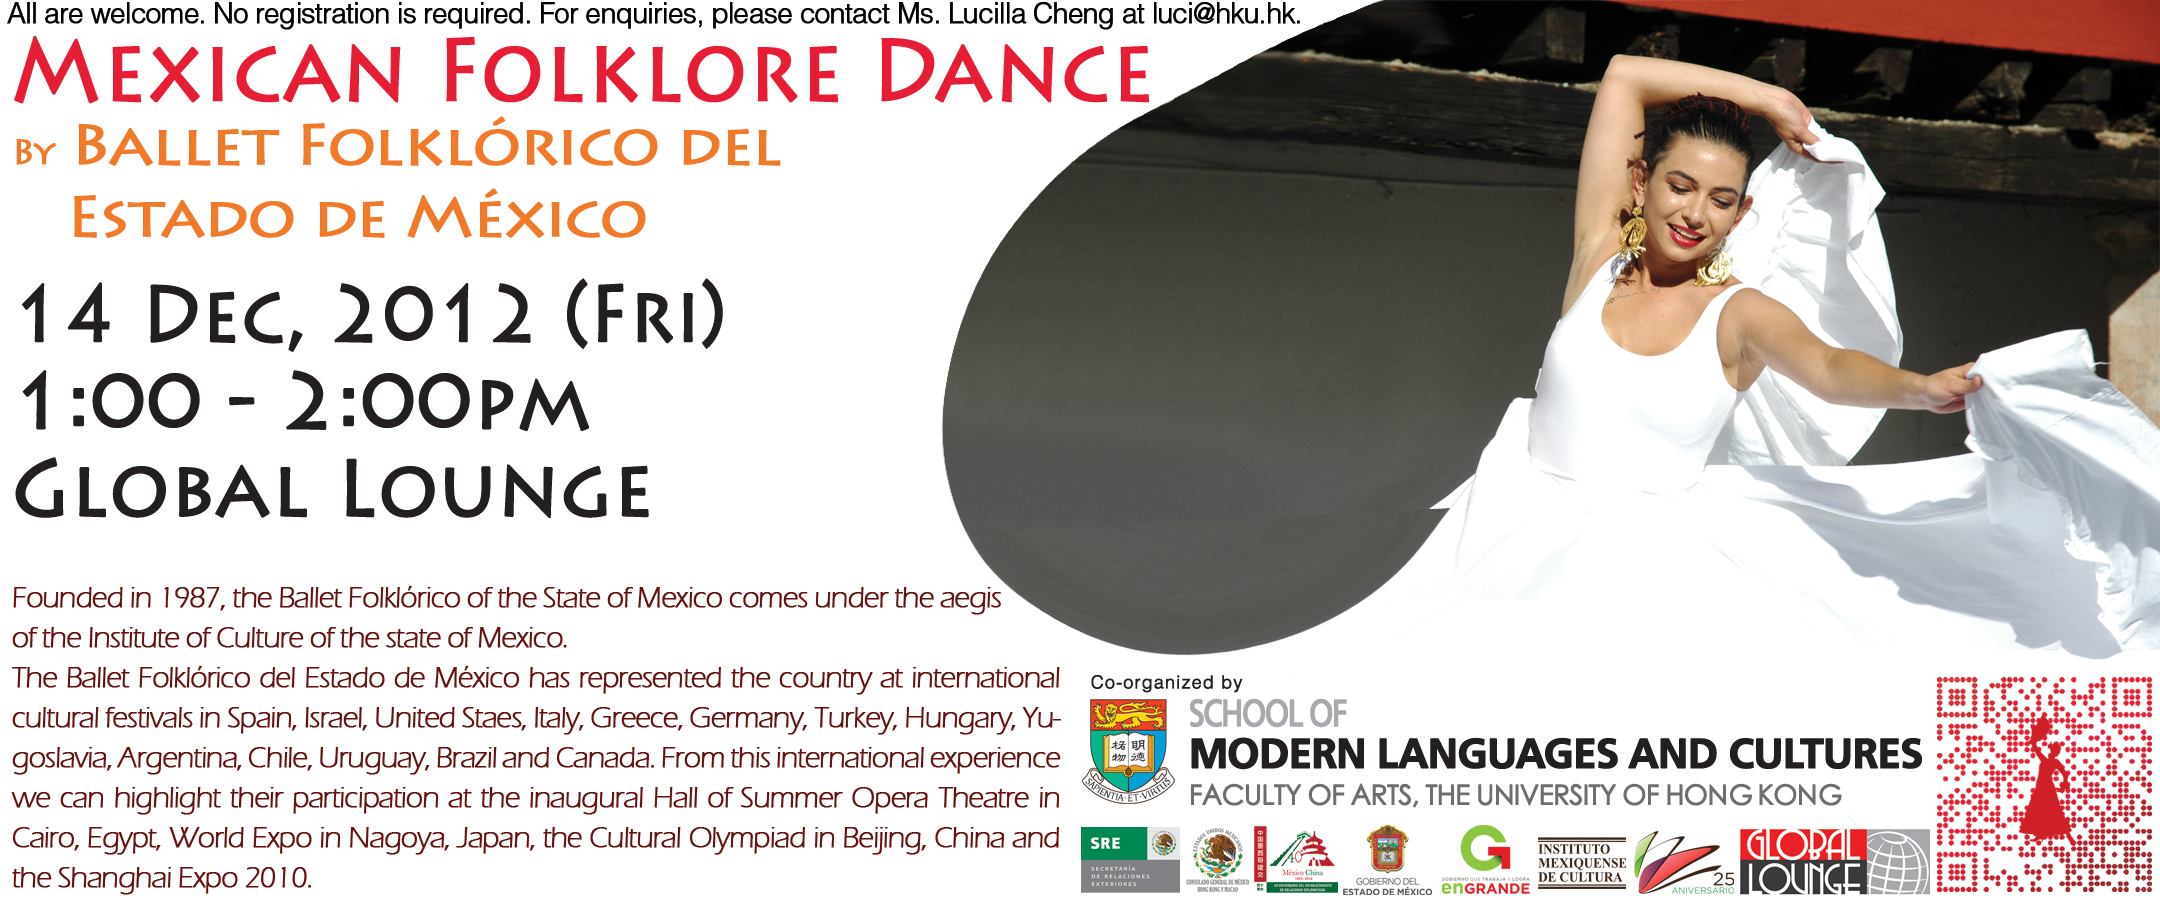 Mexican Folklore Dance By Ballet Folklórico del Estado de México